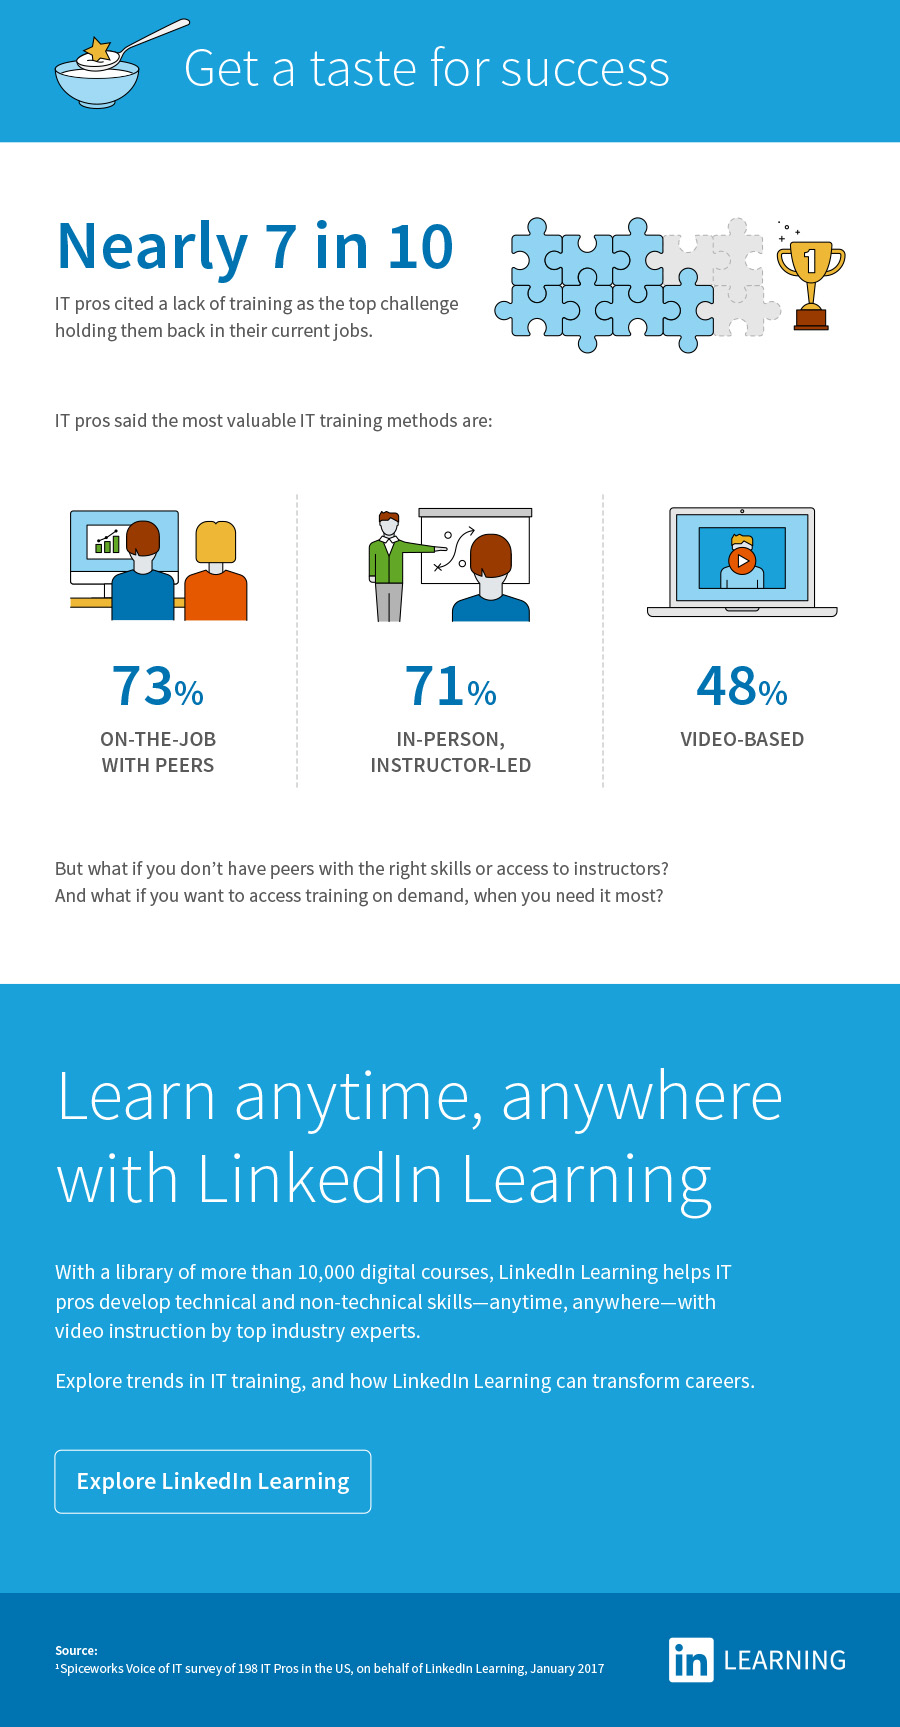 linkedin learning corporate account